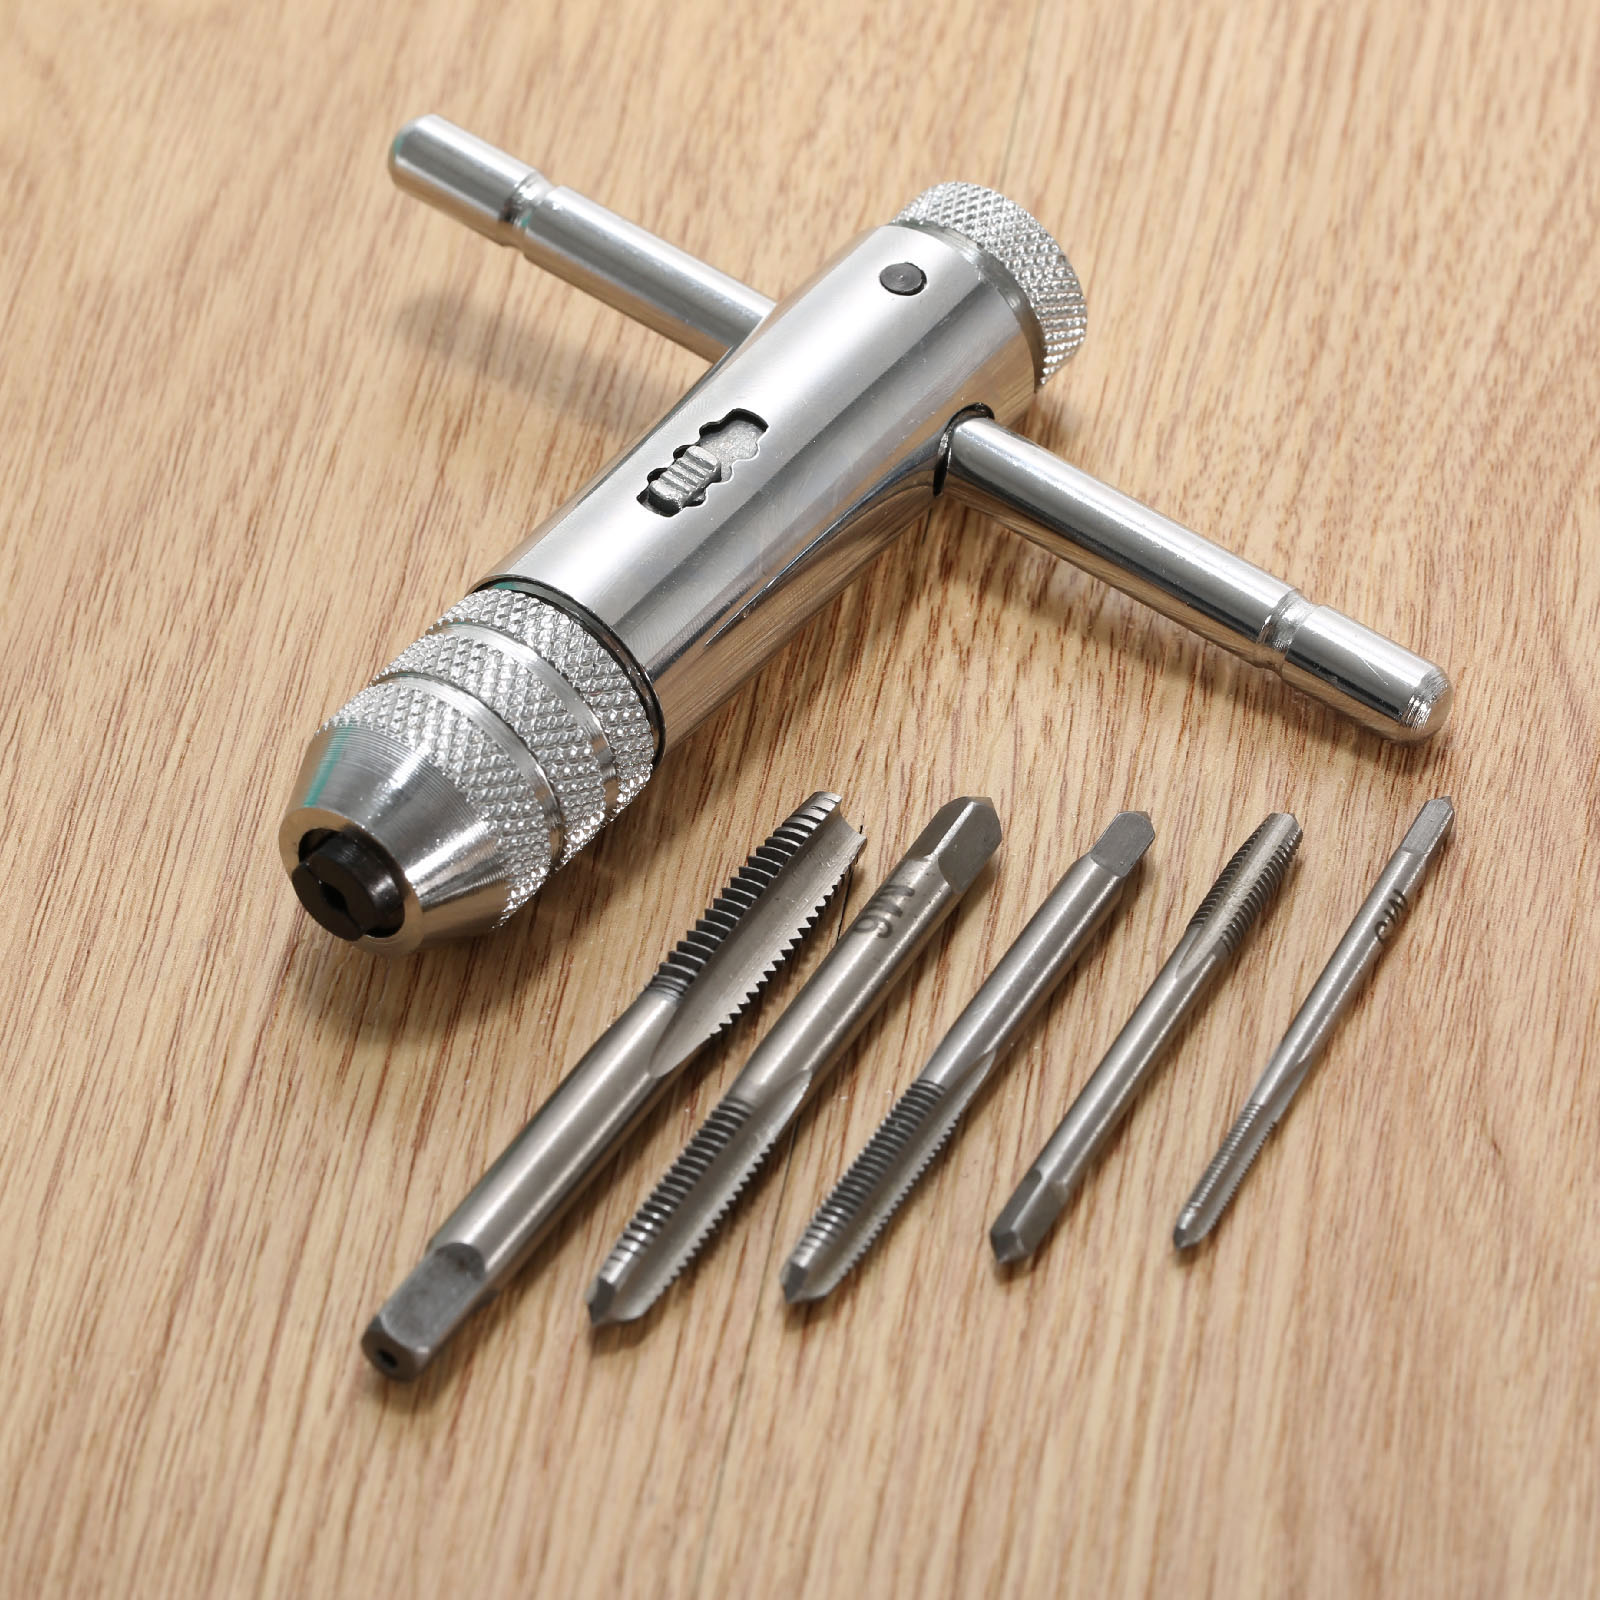 MTMTOOL Adjustable T-Handle Ratchet Tap Holder Wrench M3-M8 Handle Ratchet Tap Wrench Adjustable Metric Screw Thread Plug Tap Wrench 